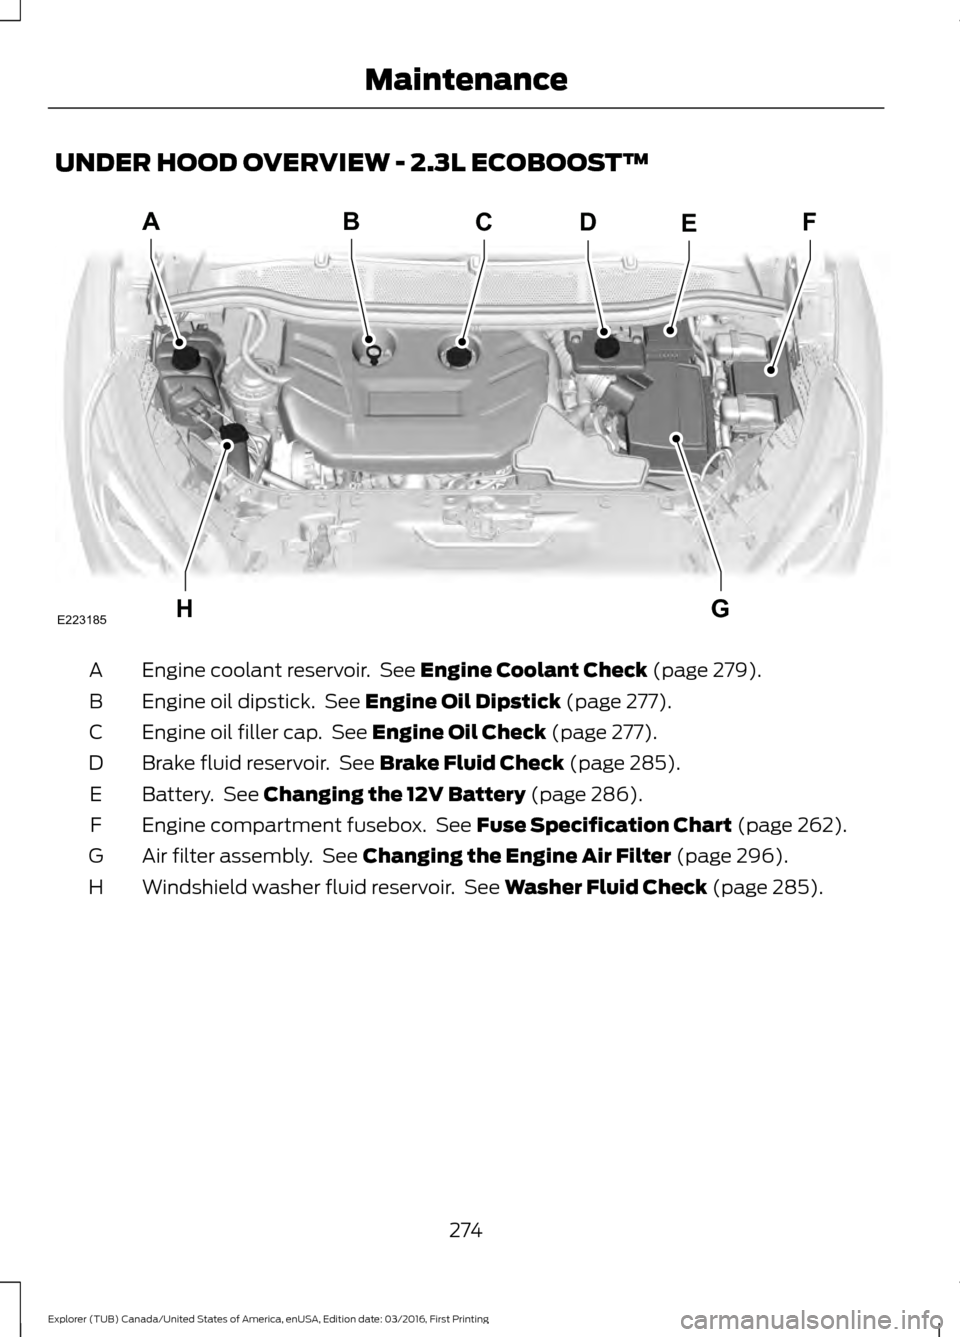 FORD EXPLORER 2017 5.G User Guide UNDER HOOD OVERVIEW - 2.3L ECOBOOST™
Engine coolant reservoir.  See Engine Coolant Check (page 279).
A
Engine oil dipstick.  See 
Engine Oil Dipstick (page 277).
B
Engine oil filler cap.  See 
Engin